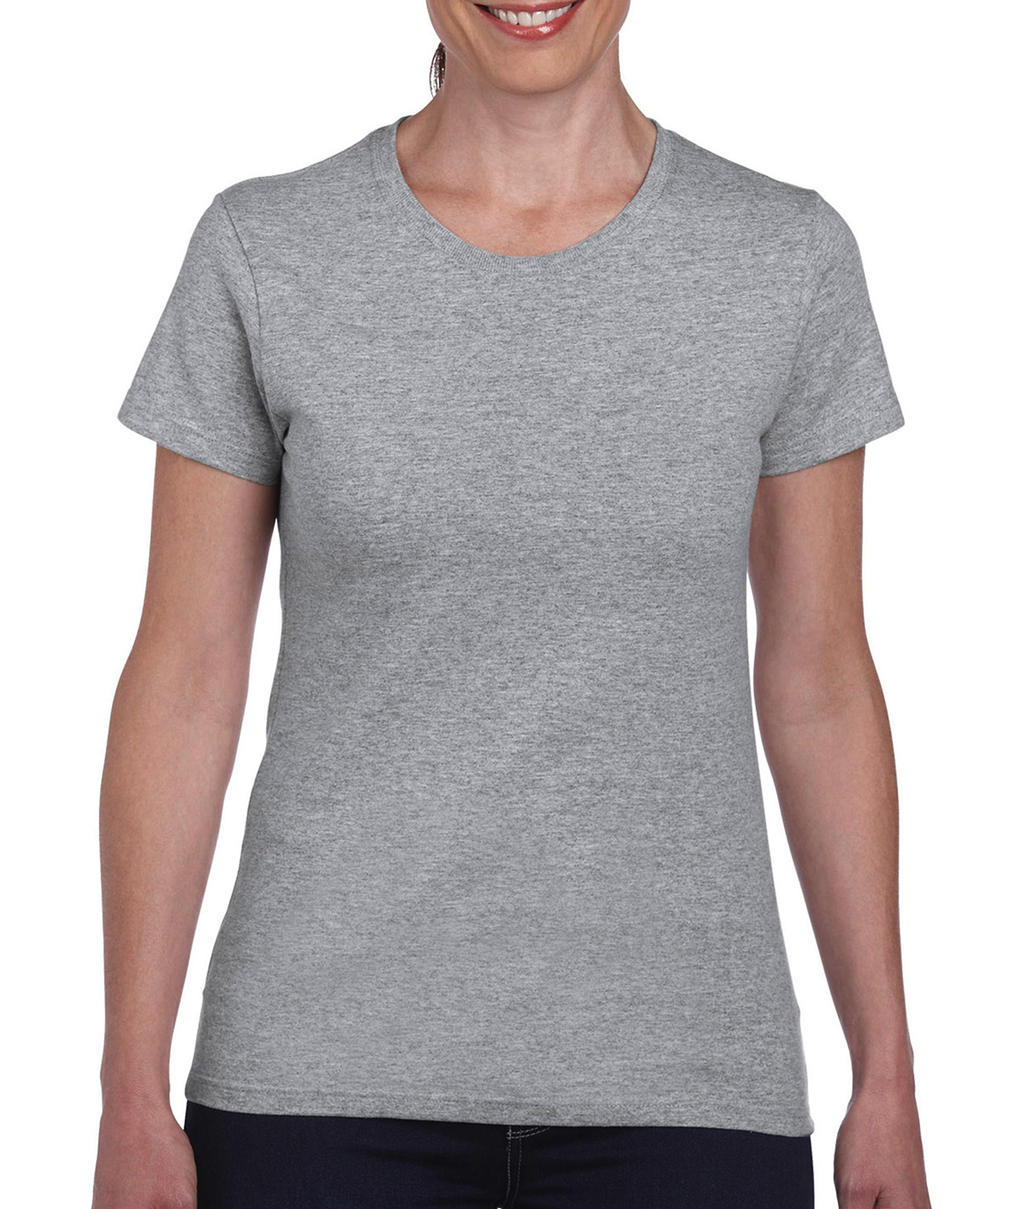  Ladies Heavy Cotton T-Shirt in Farbe Sport Grey